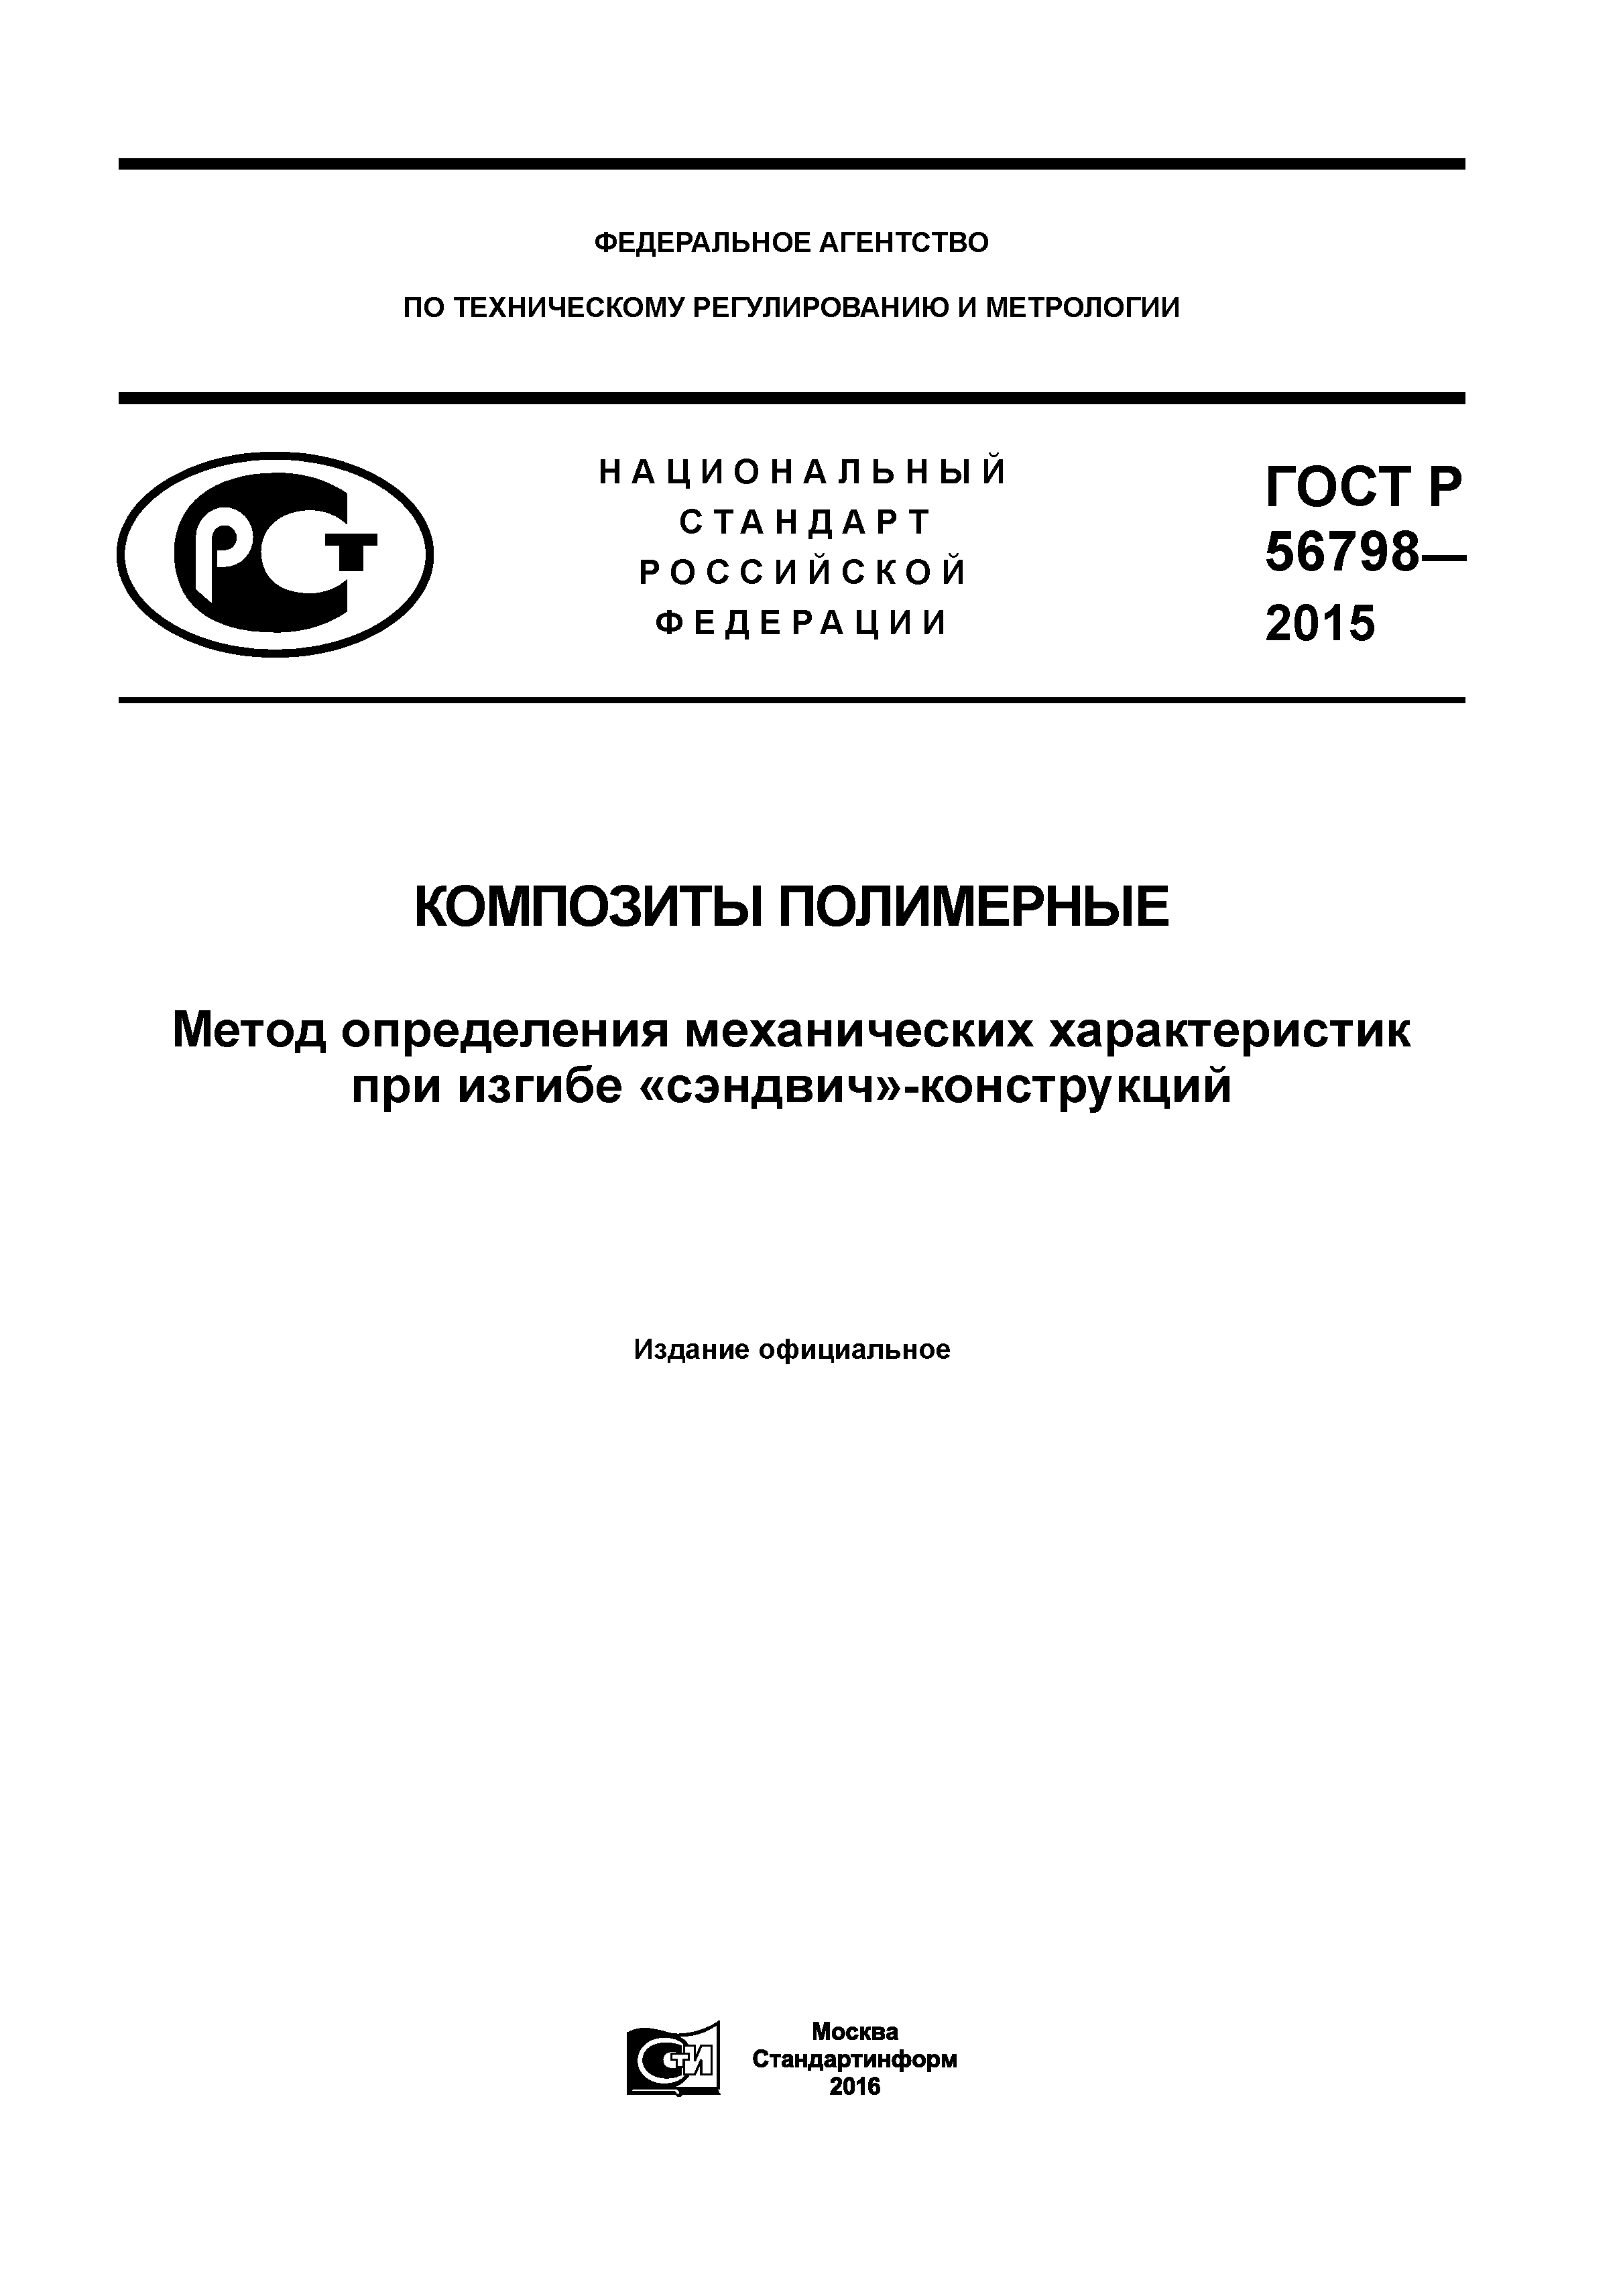 ГОСТ Р 56798-2015